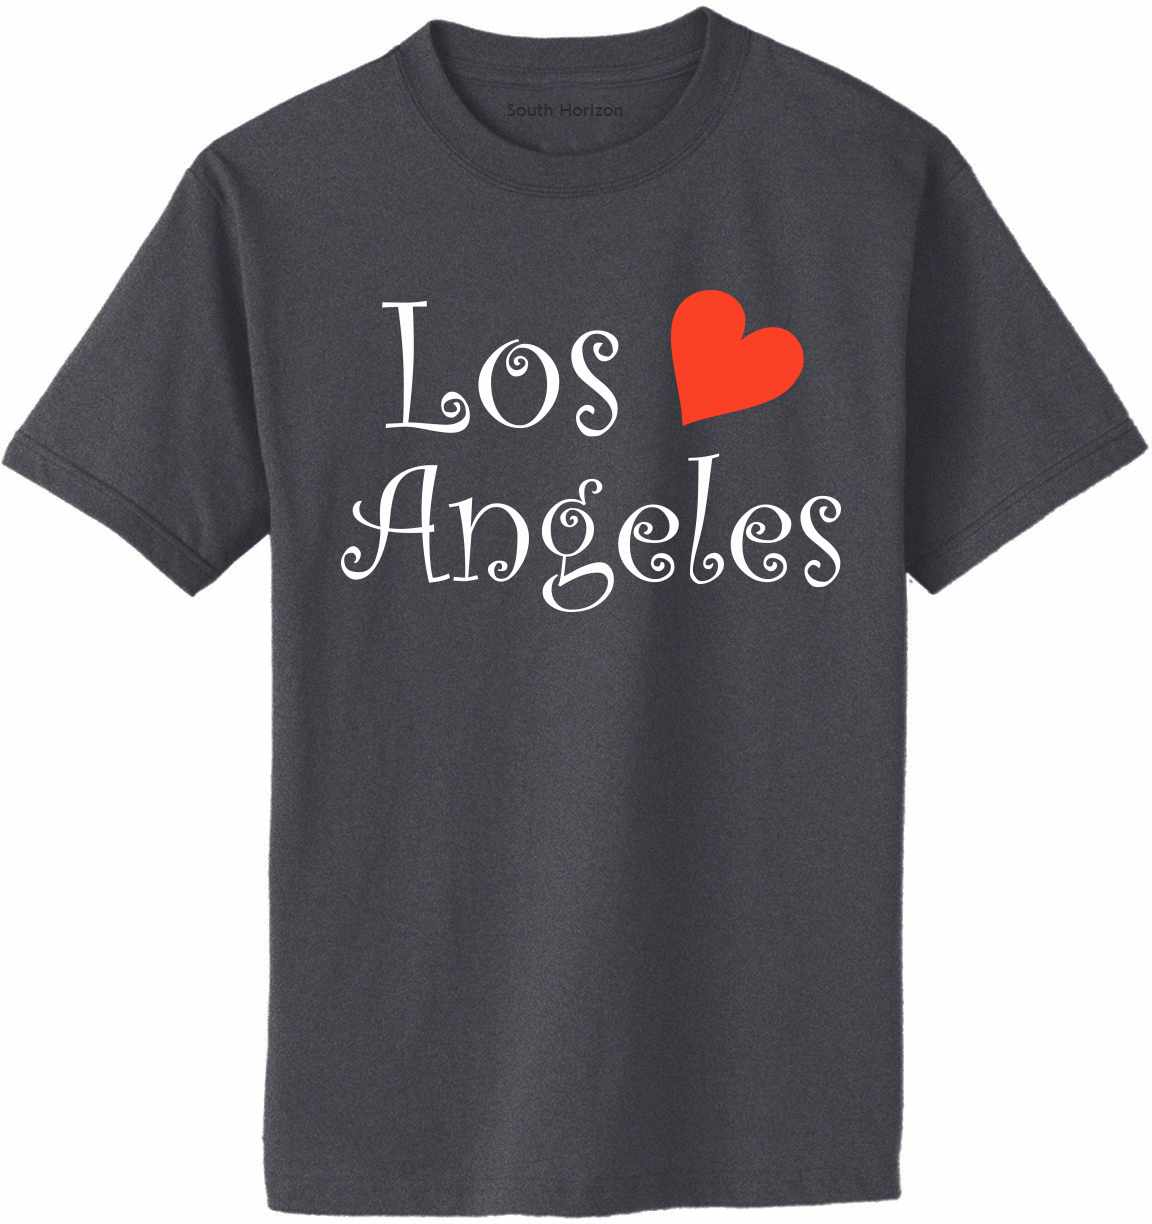 Los Angeles on Adult T-Shirt (#1335-1)